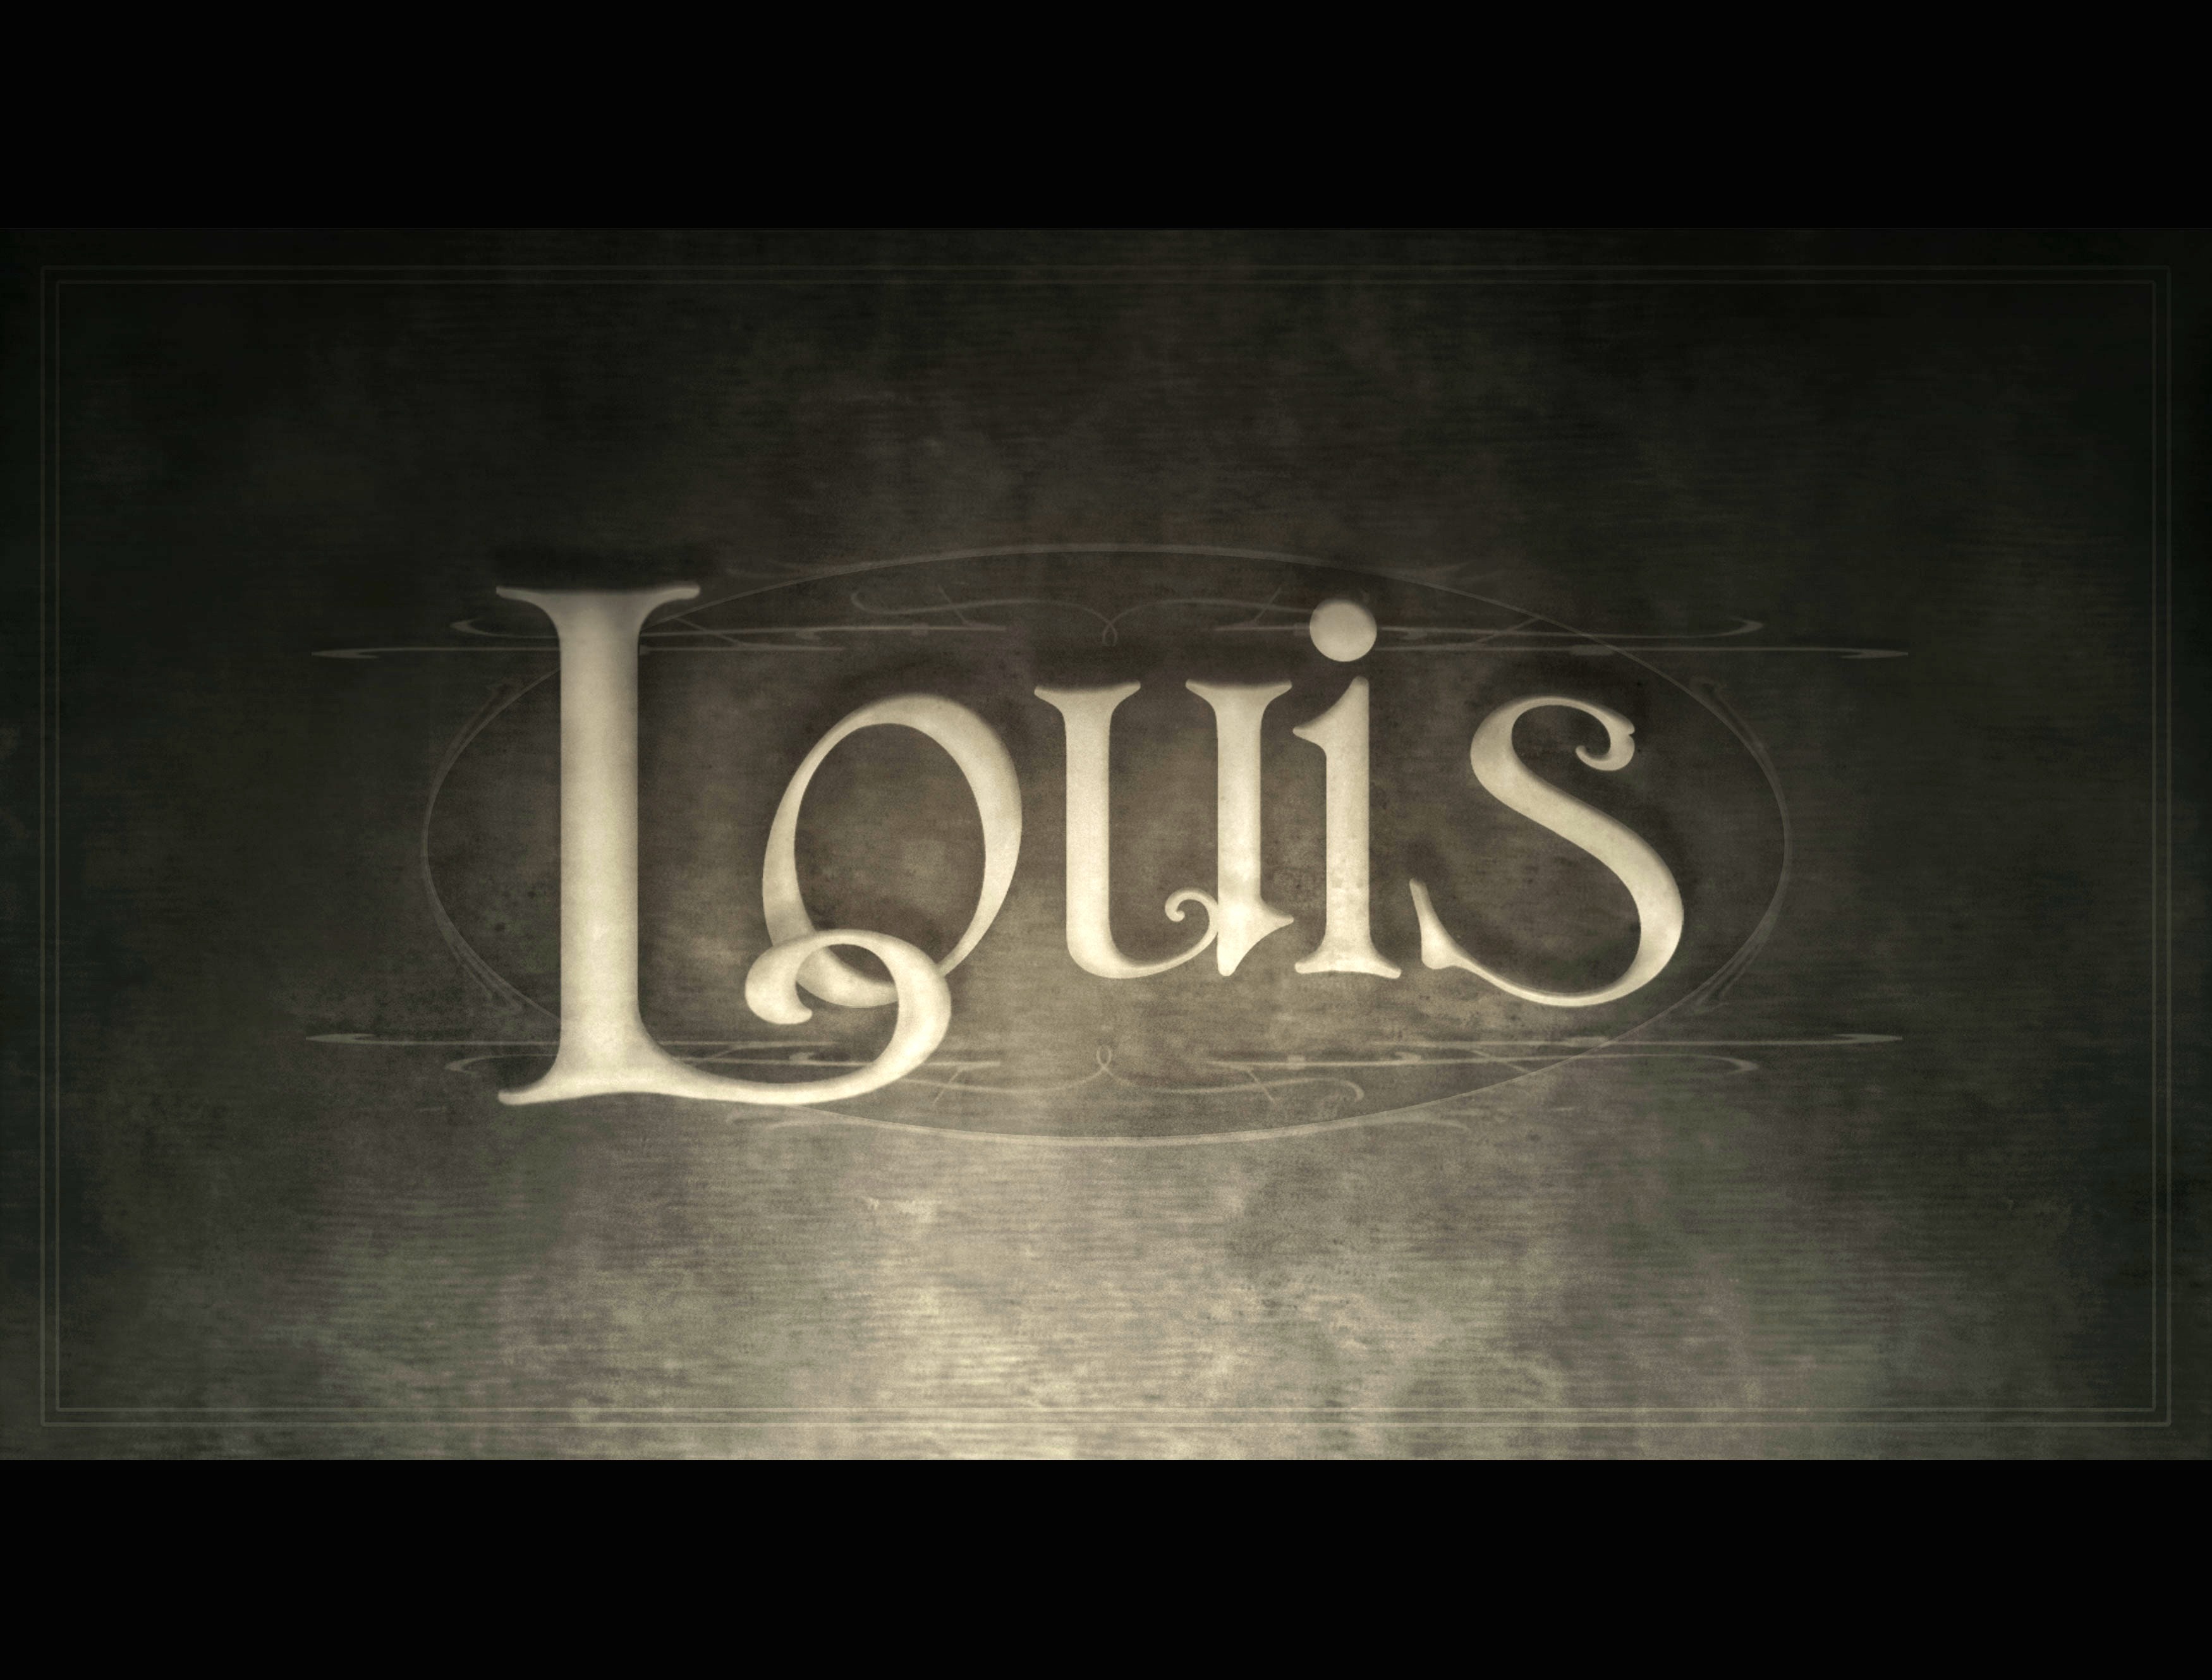 LOUIS main title design by Gary Gutierrez